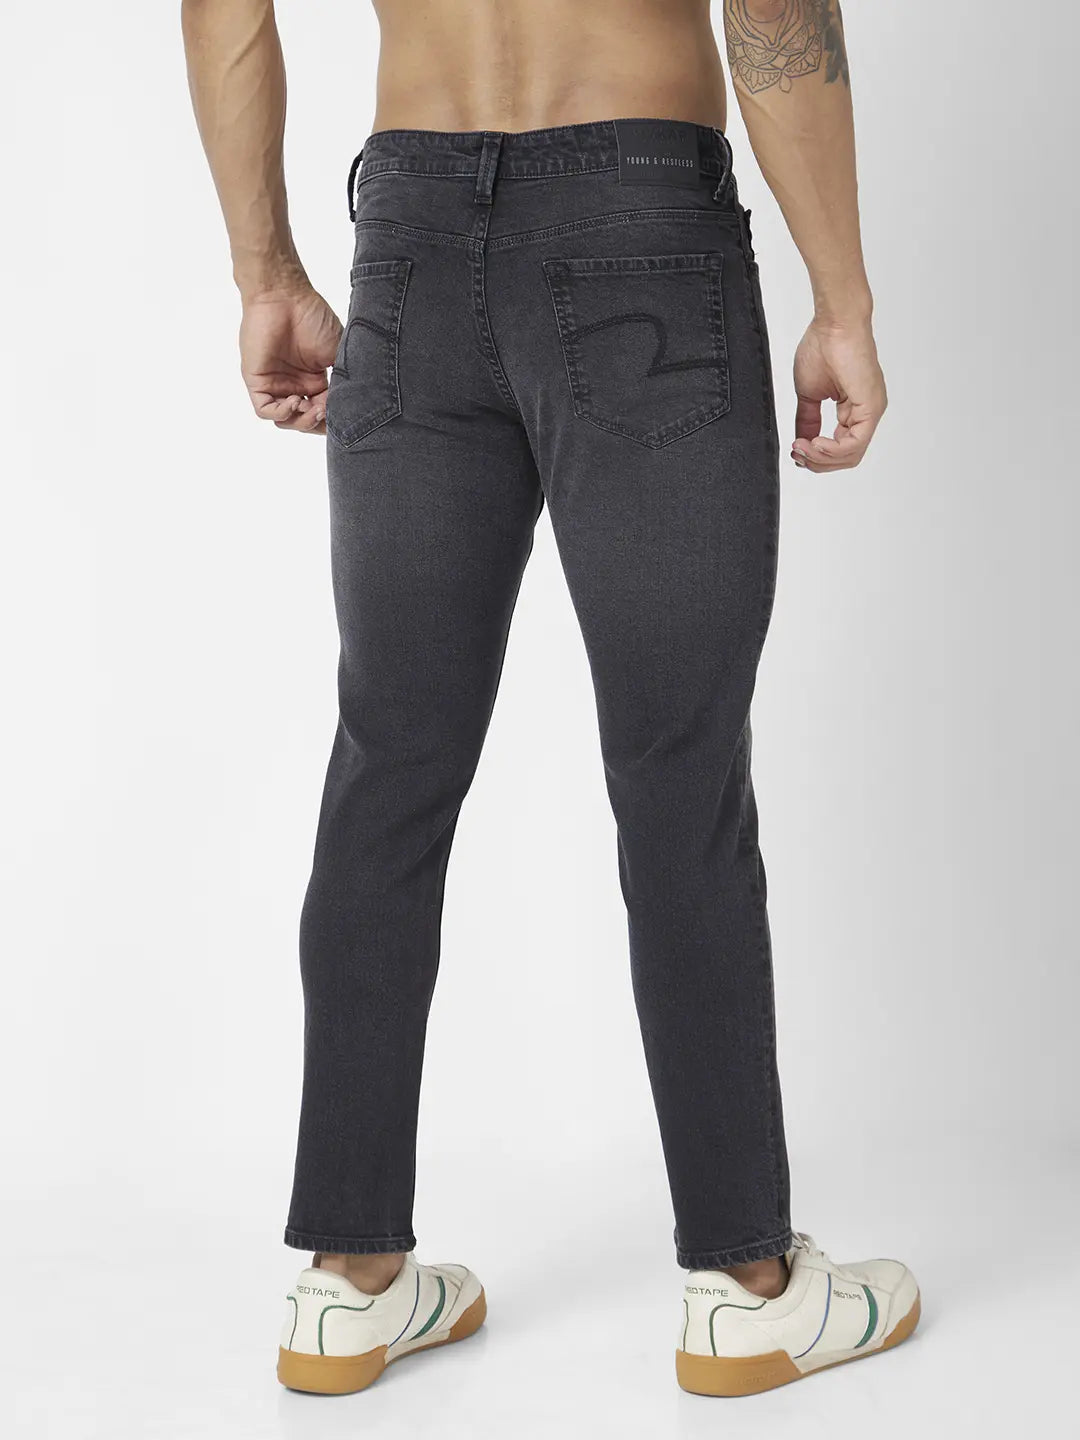 Spykar Men Carbon Black Cotton Stretch Super Slim Fit Tapered Length Clean Look Low Rise Jeans (Super Skinny)